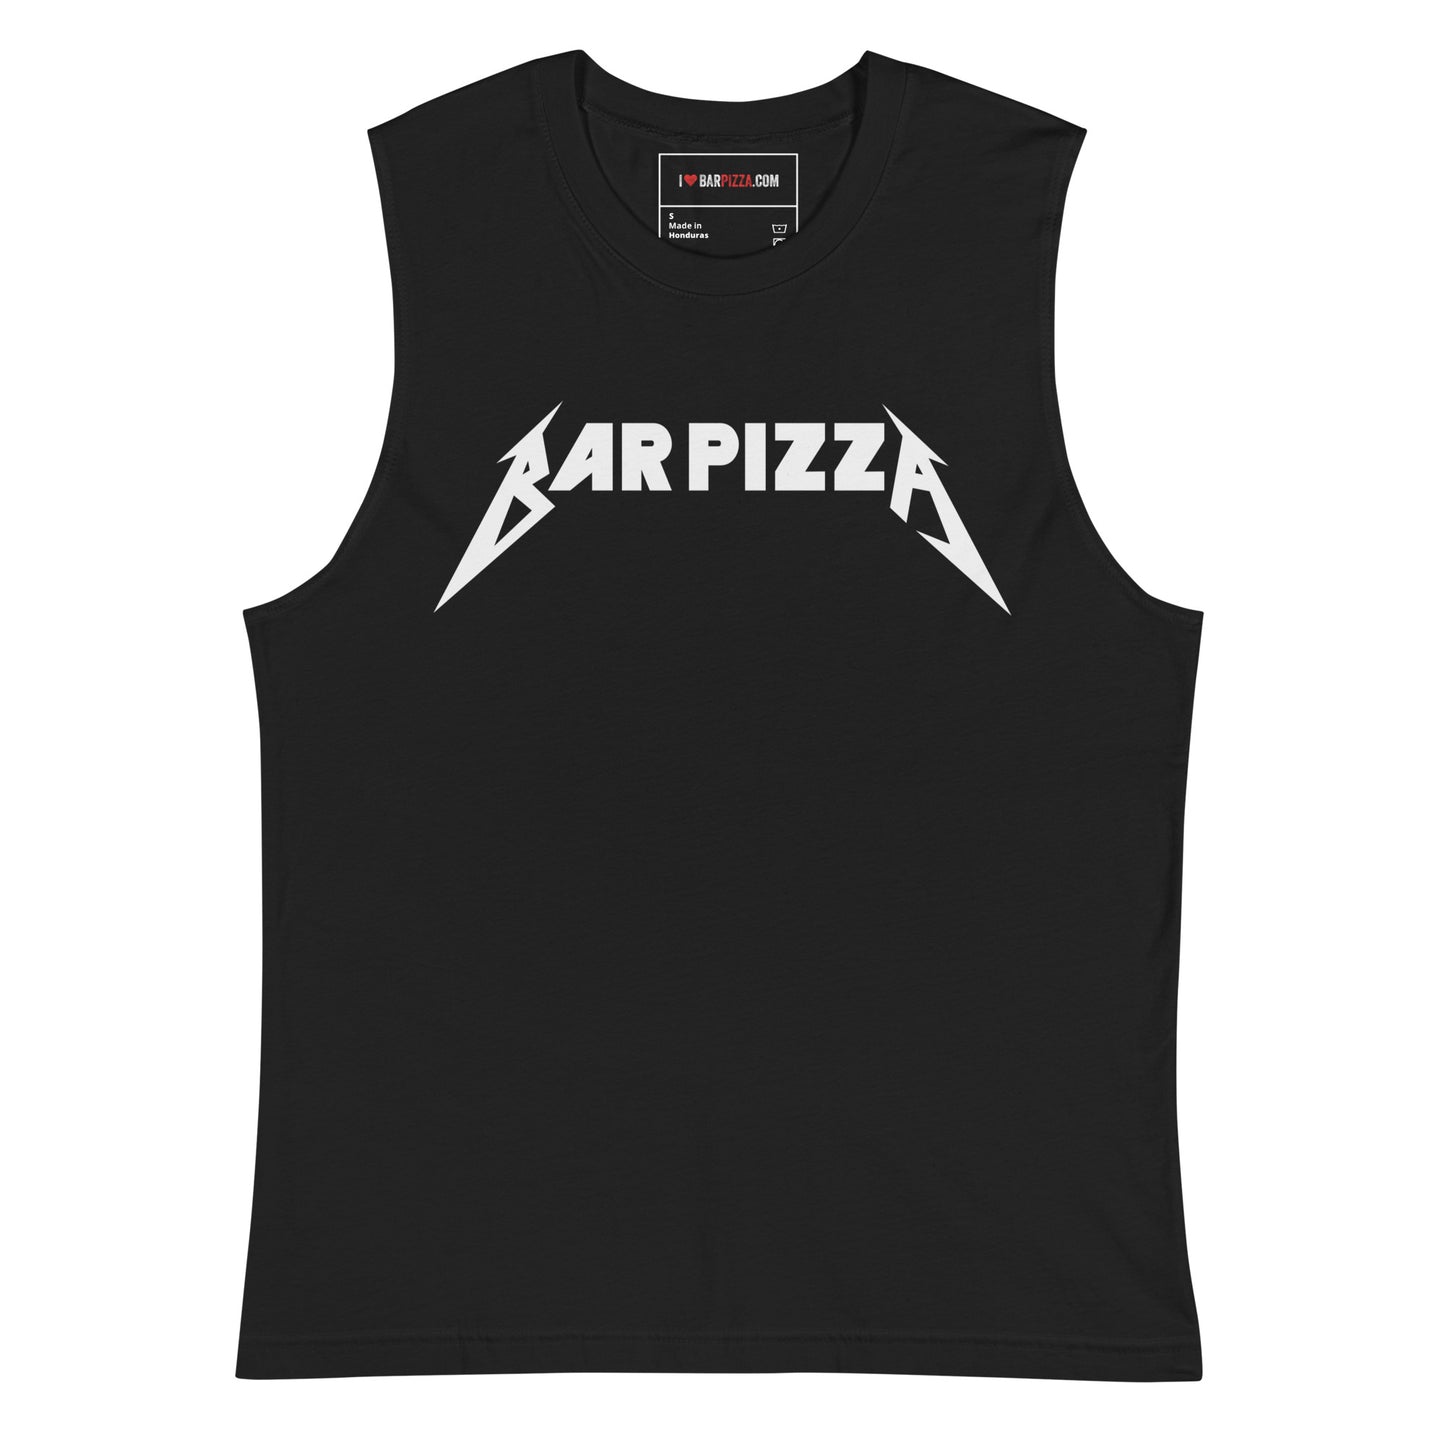 Bar Pizza Muscle Shirt